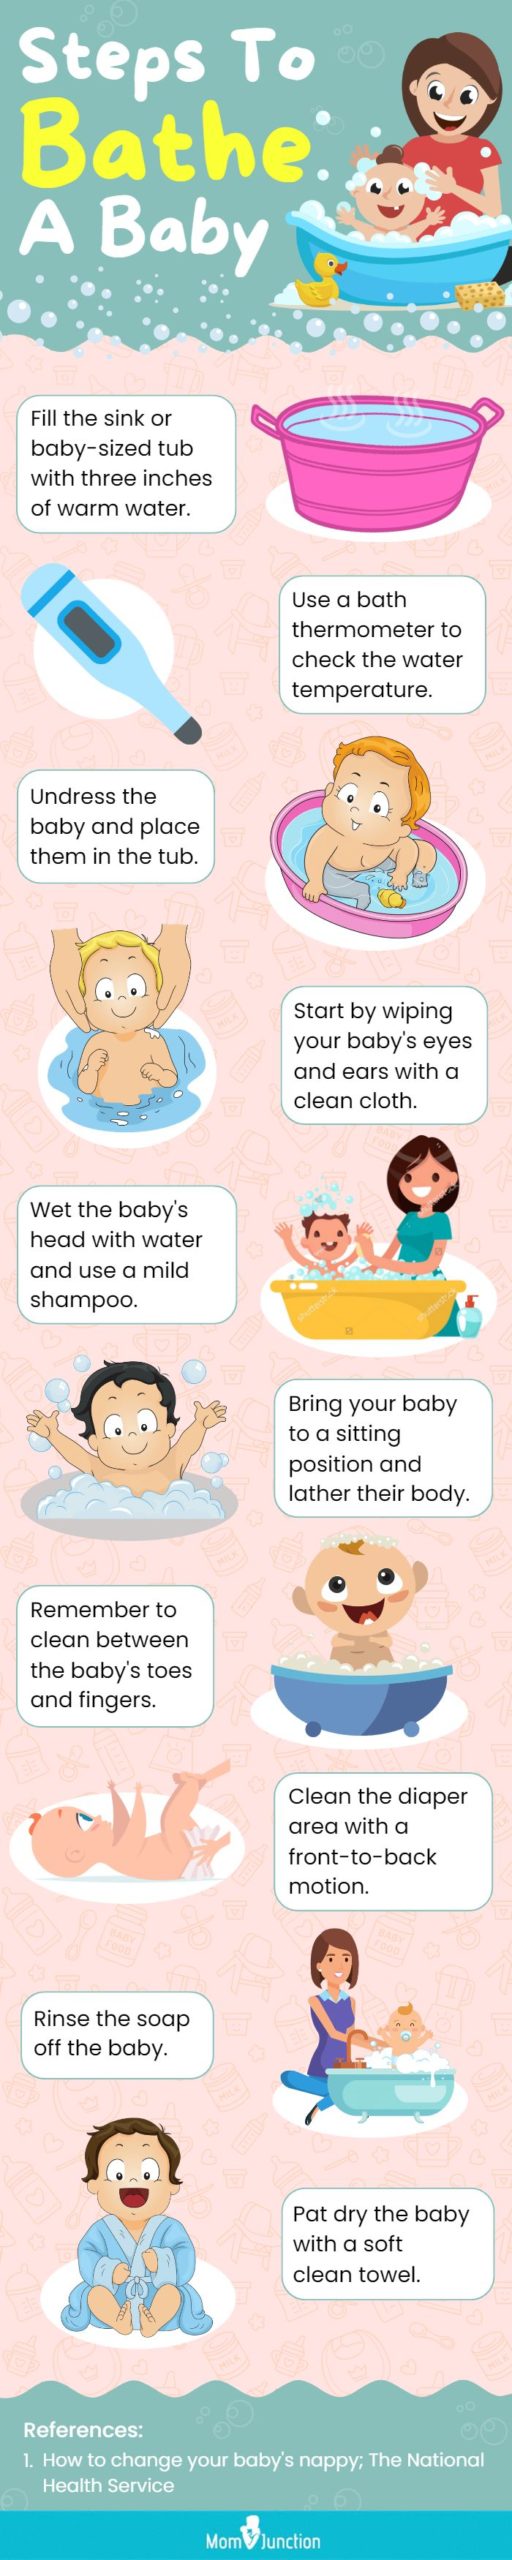 Aycorn Digital Baby Bath Thermometer Baby Safety - Fahrenheit